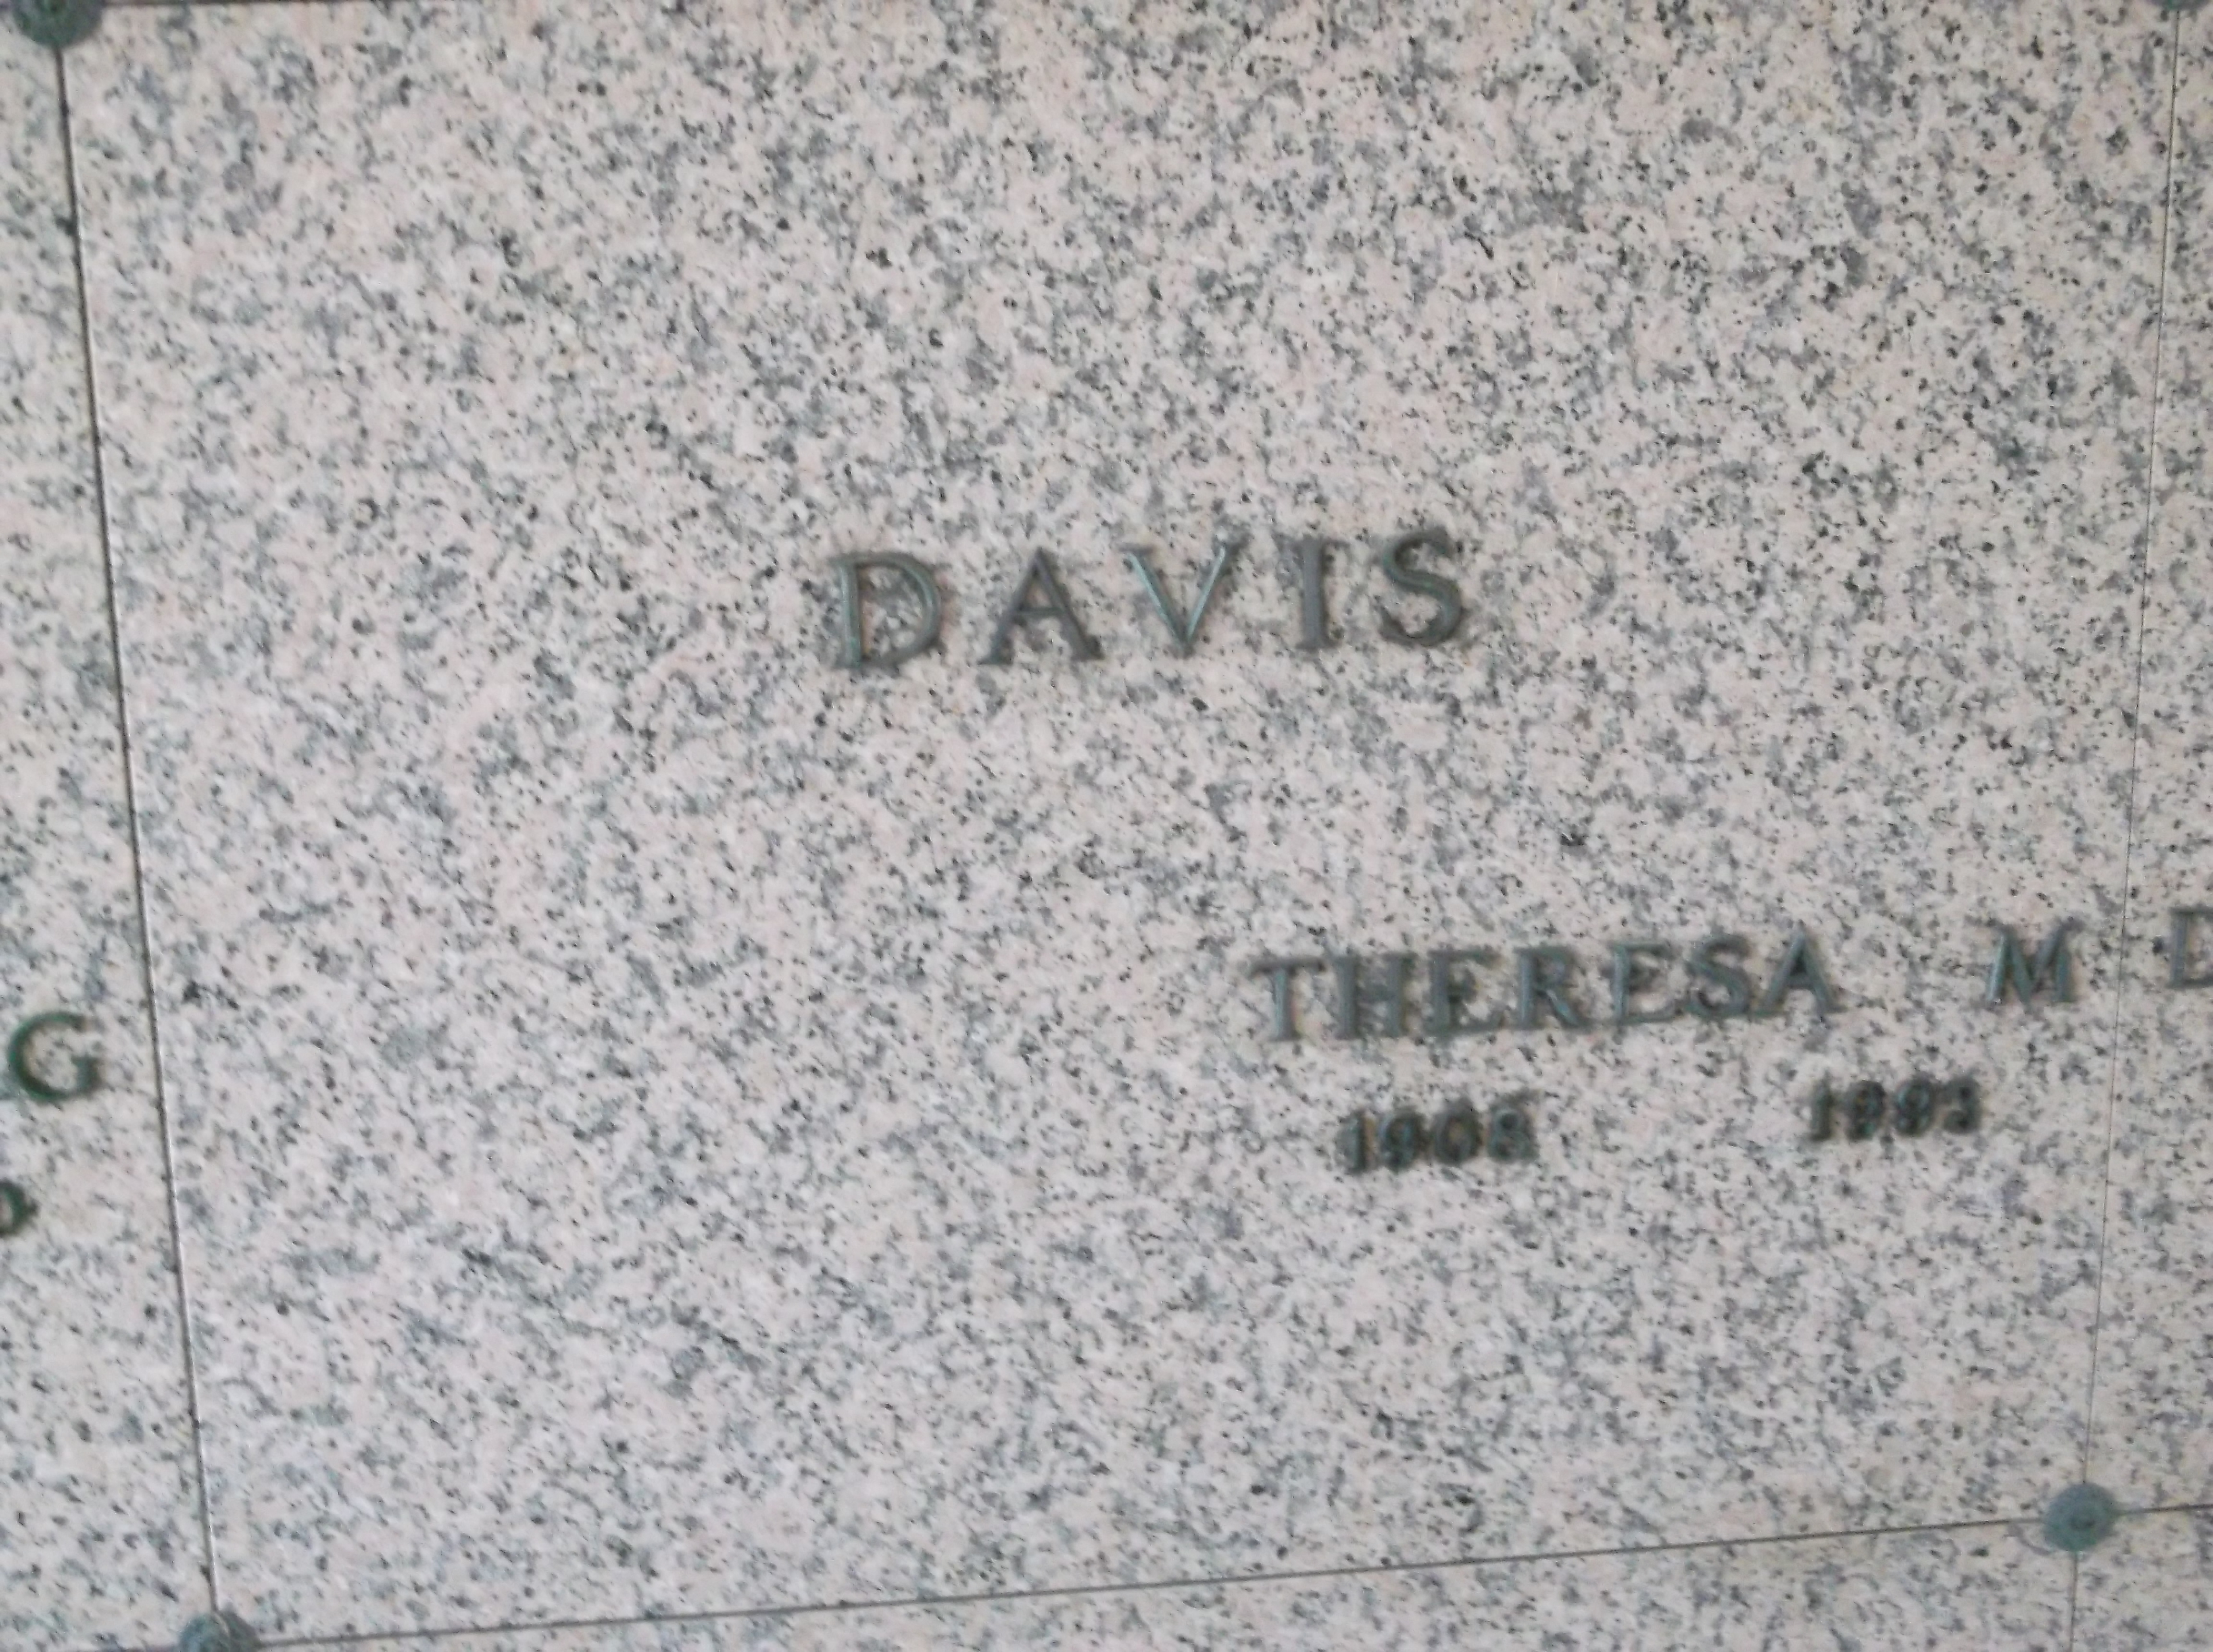 Theresa M Davis